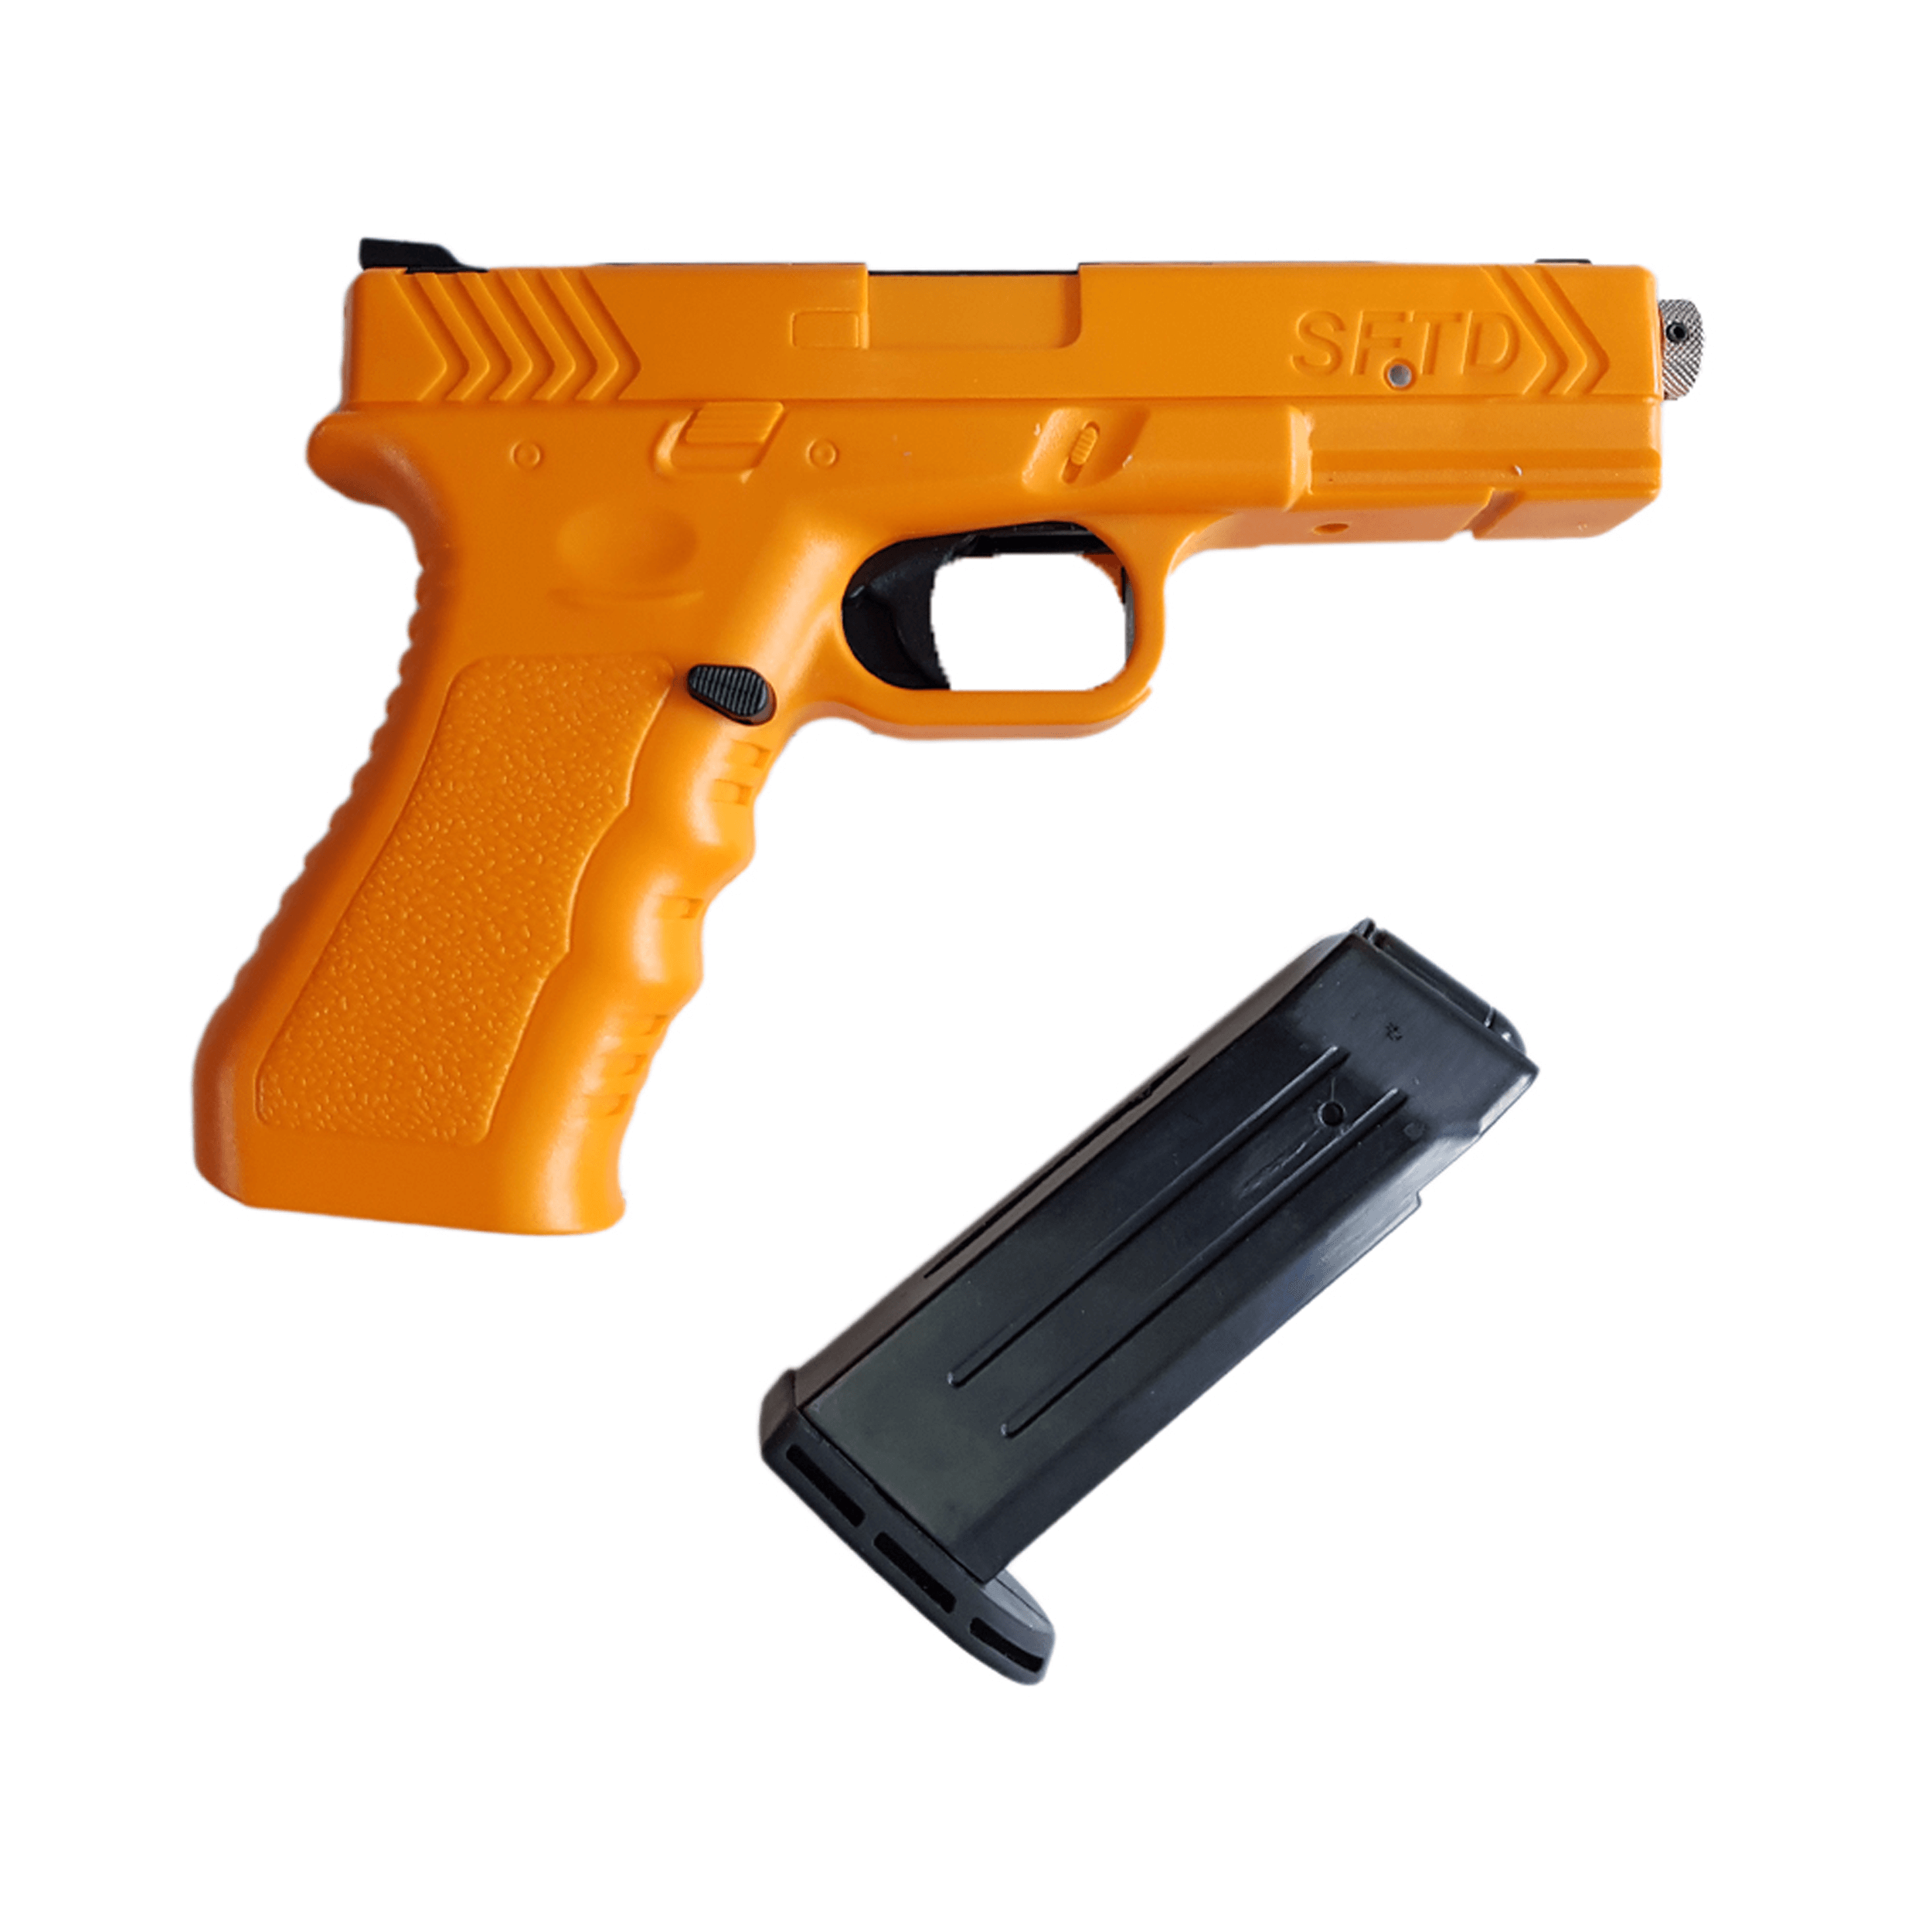 Glock 17 kompatible Pro Laser Training Pistol